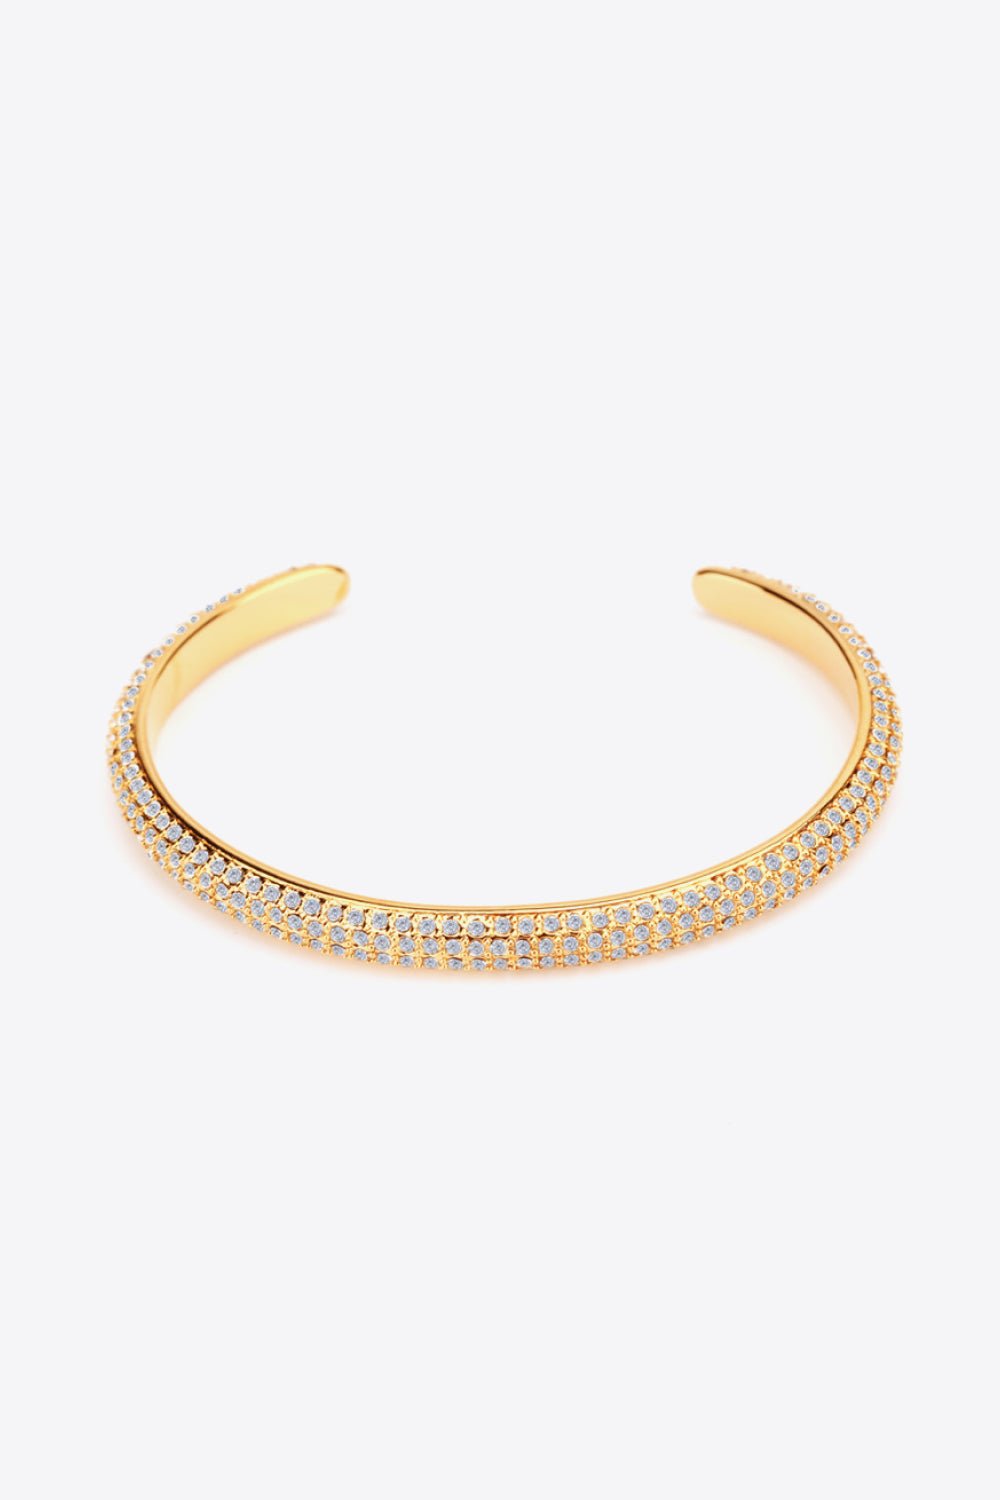 18K Gold-Plated Rhinestone Open Bracelet - PINKCOLADA-Bracelets-100100603659884